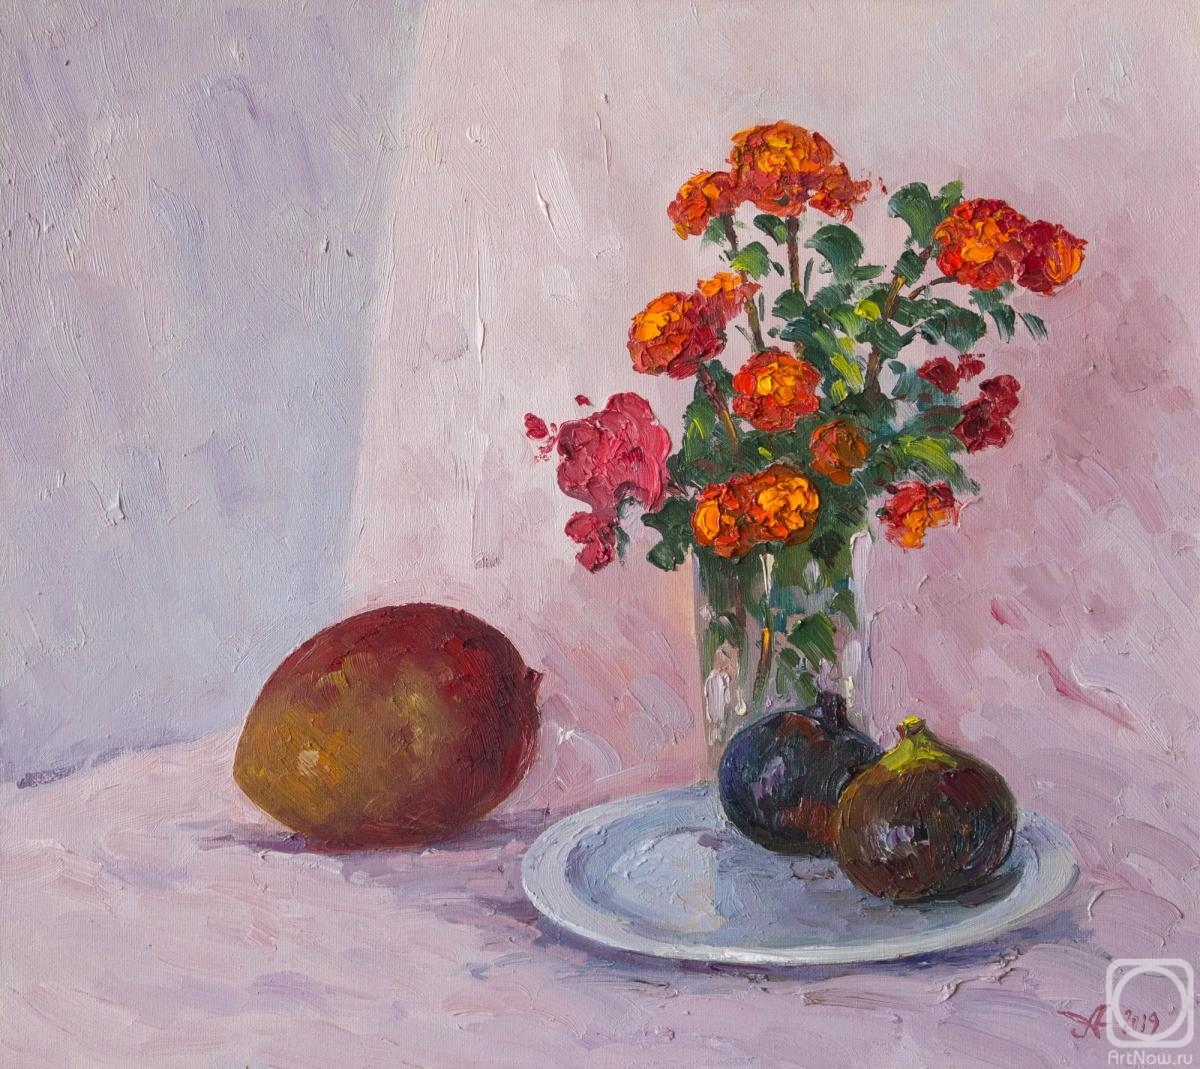 Alexandrovsky Alexander. Mango and figs